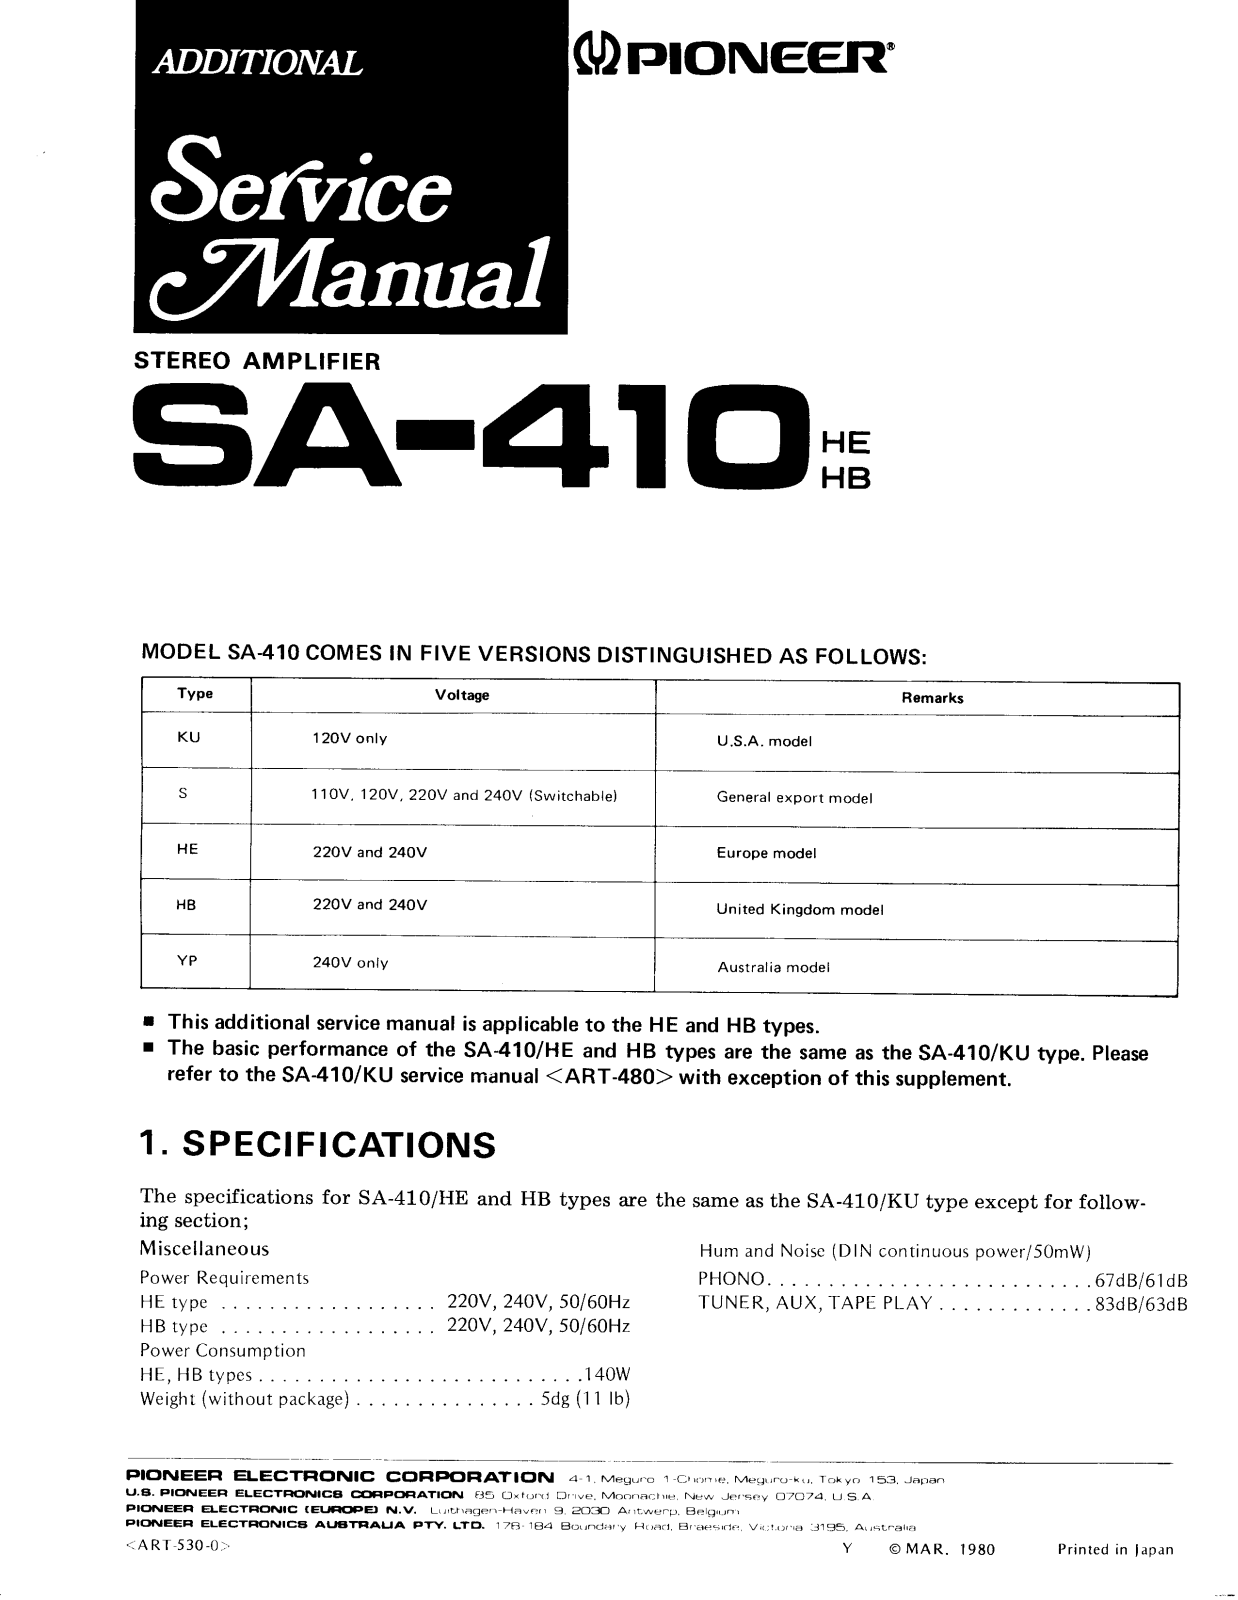 Pioneer SA-410 Service manual